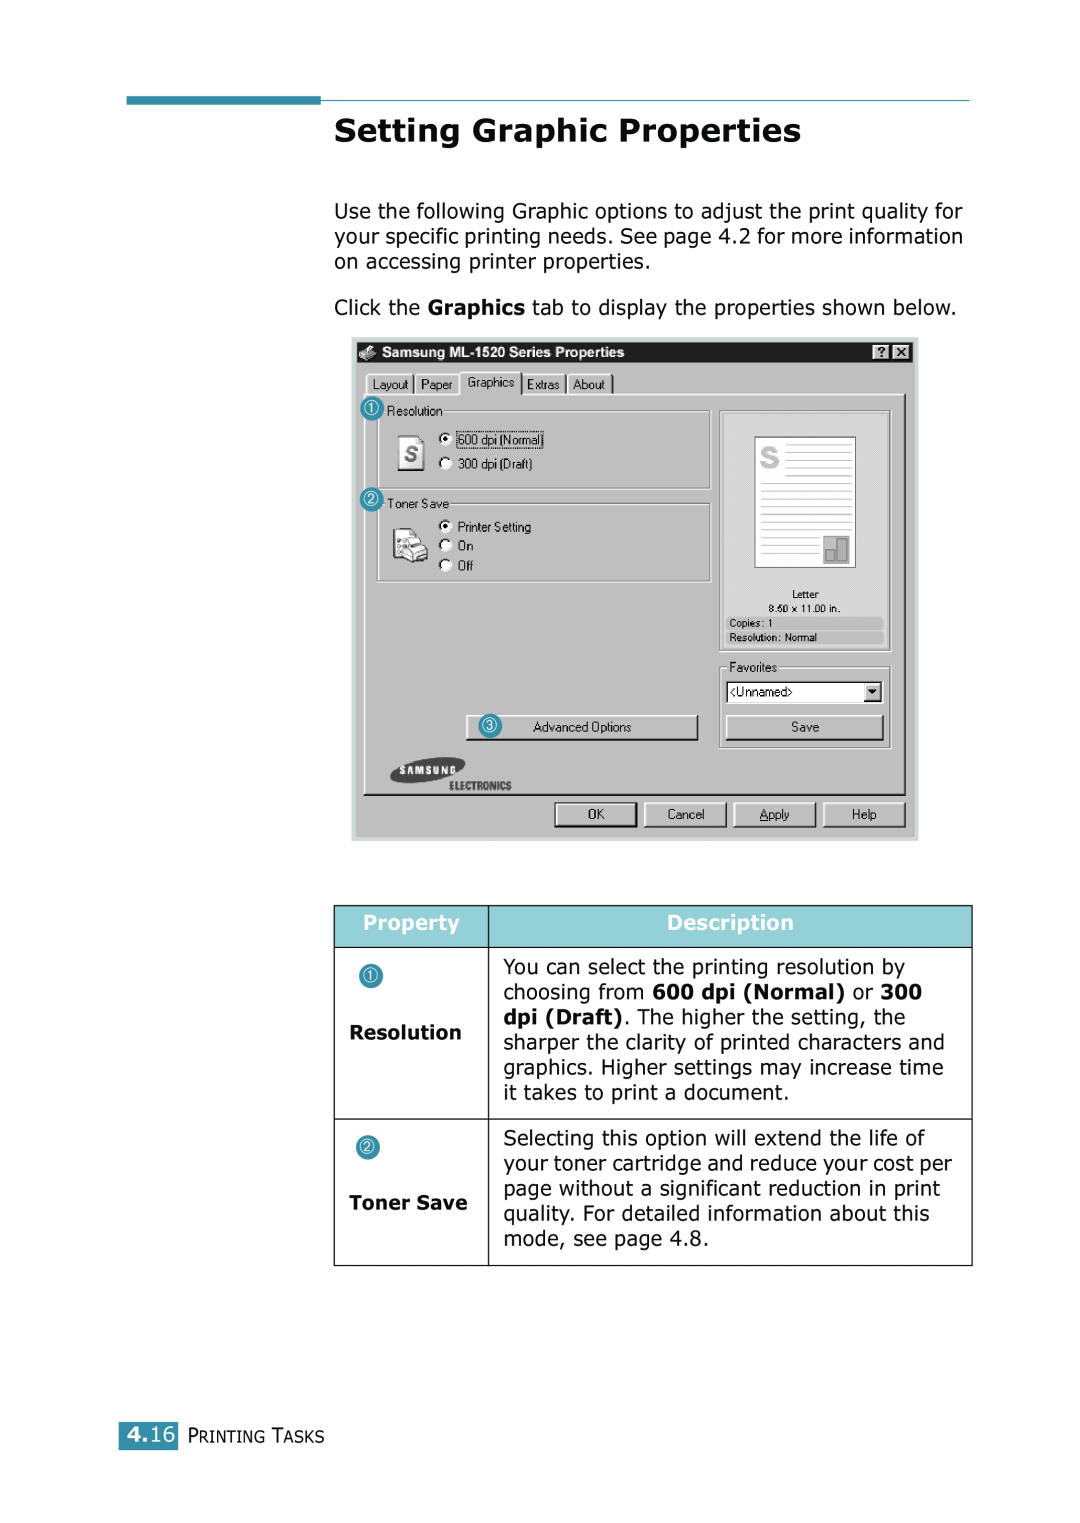 Samsung ML-1520 manual Setting Graphic Properties, ➀ ➁ ➂, Property, Description, Resolution, Toner Save 